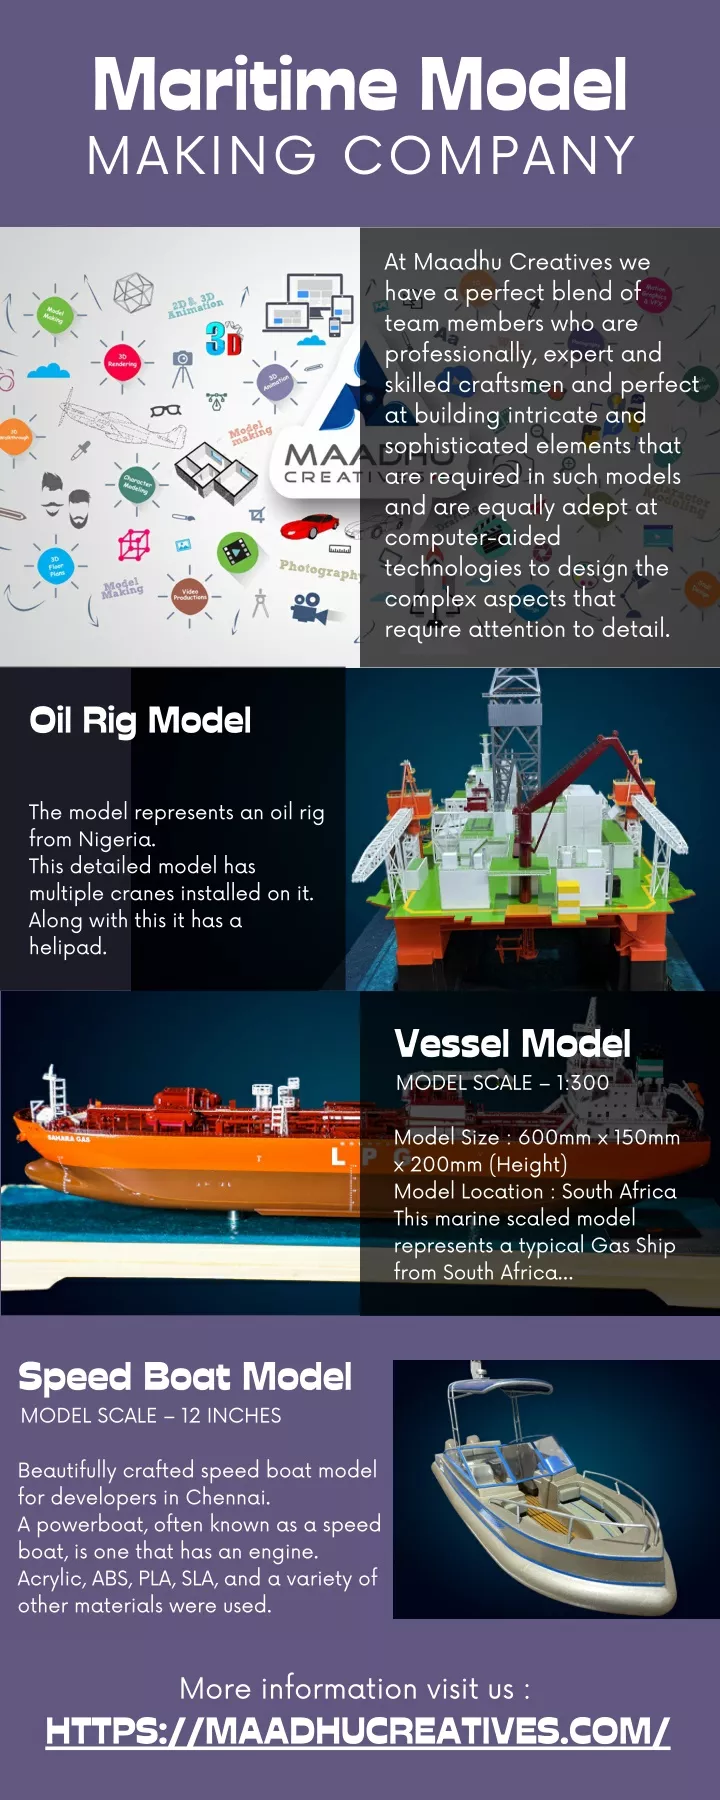 maritime model making company